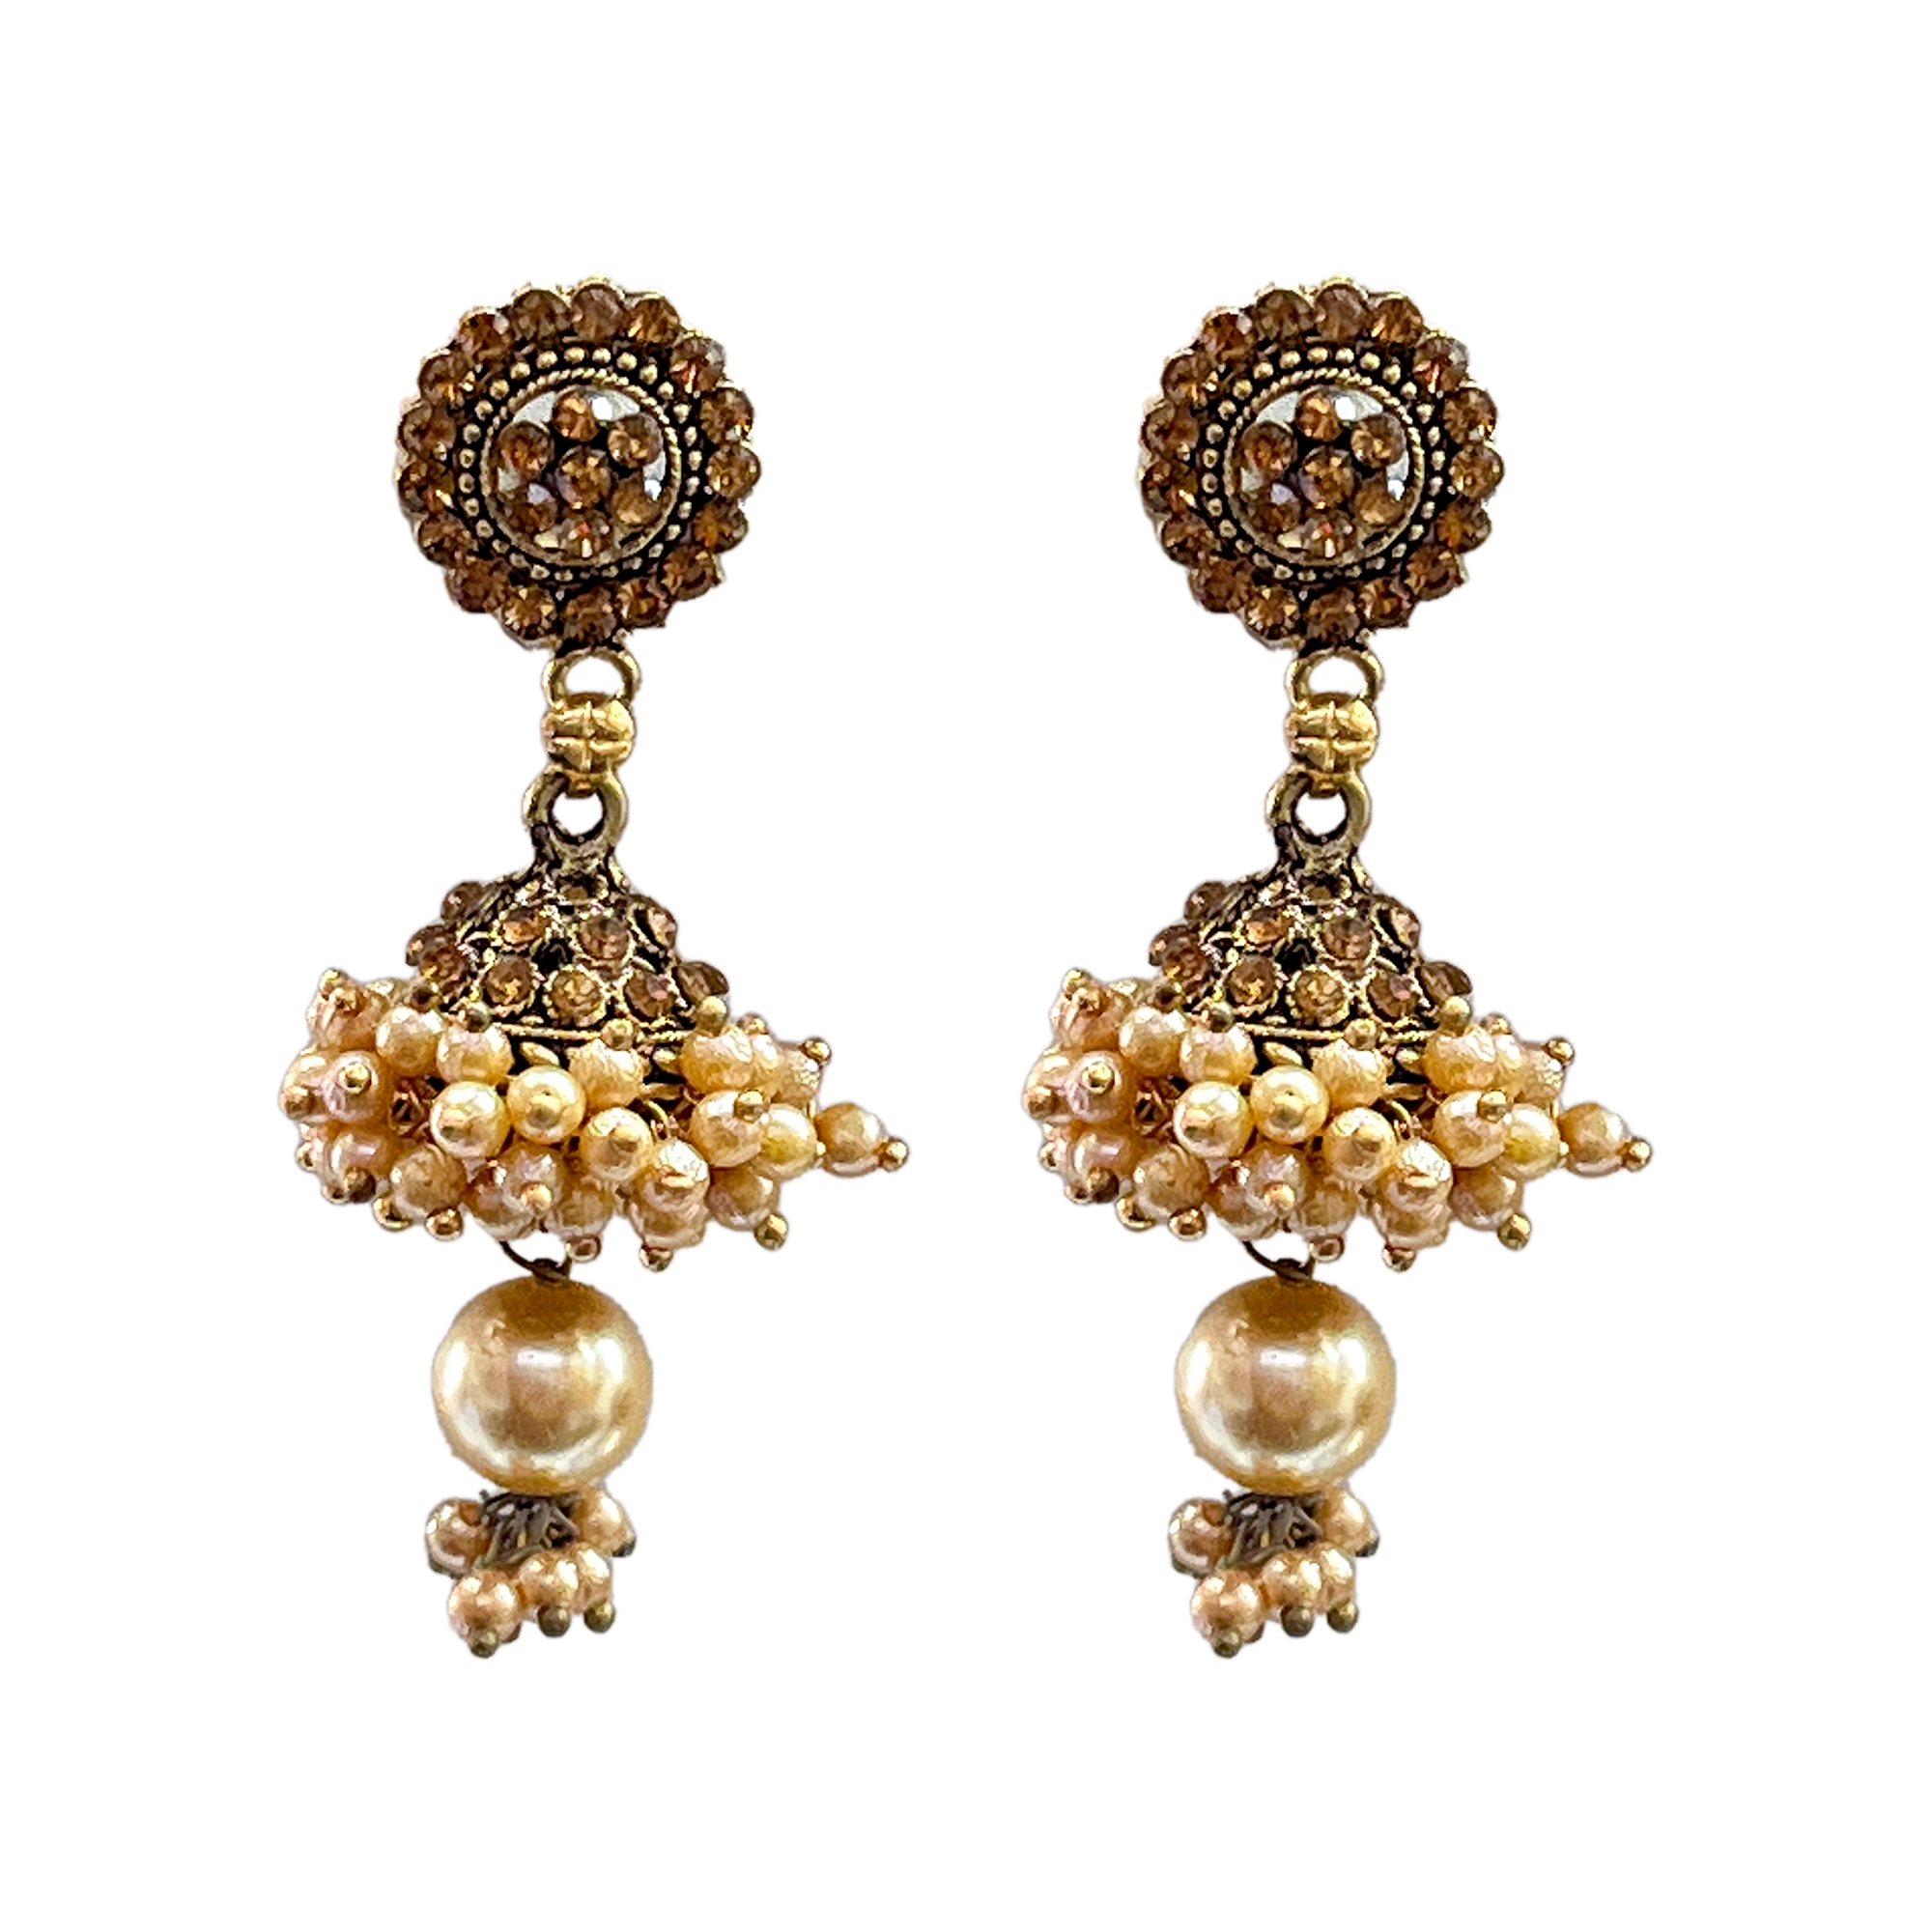 Beautiful Gold-Plated Jhumka Earrings